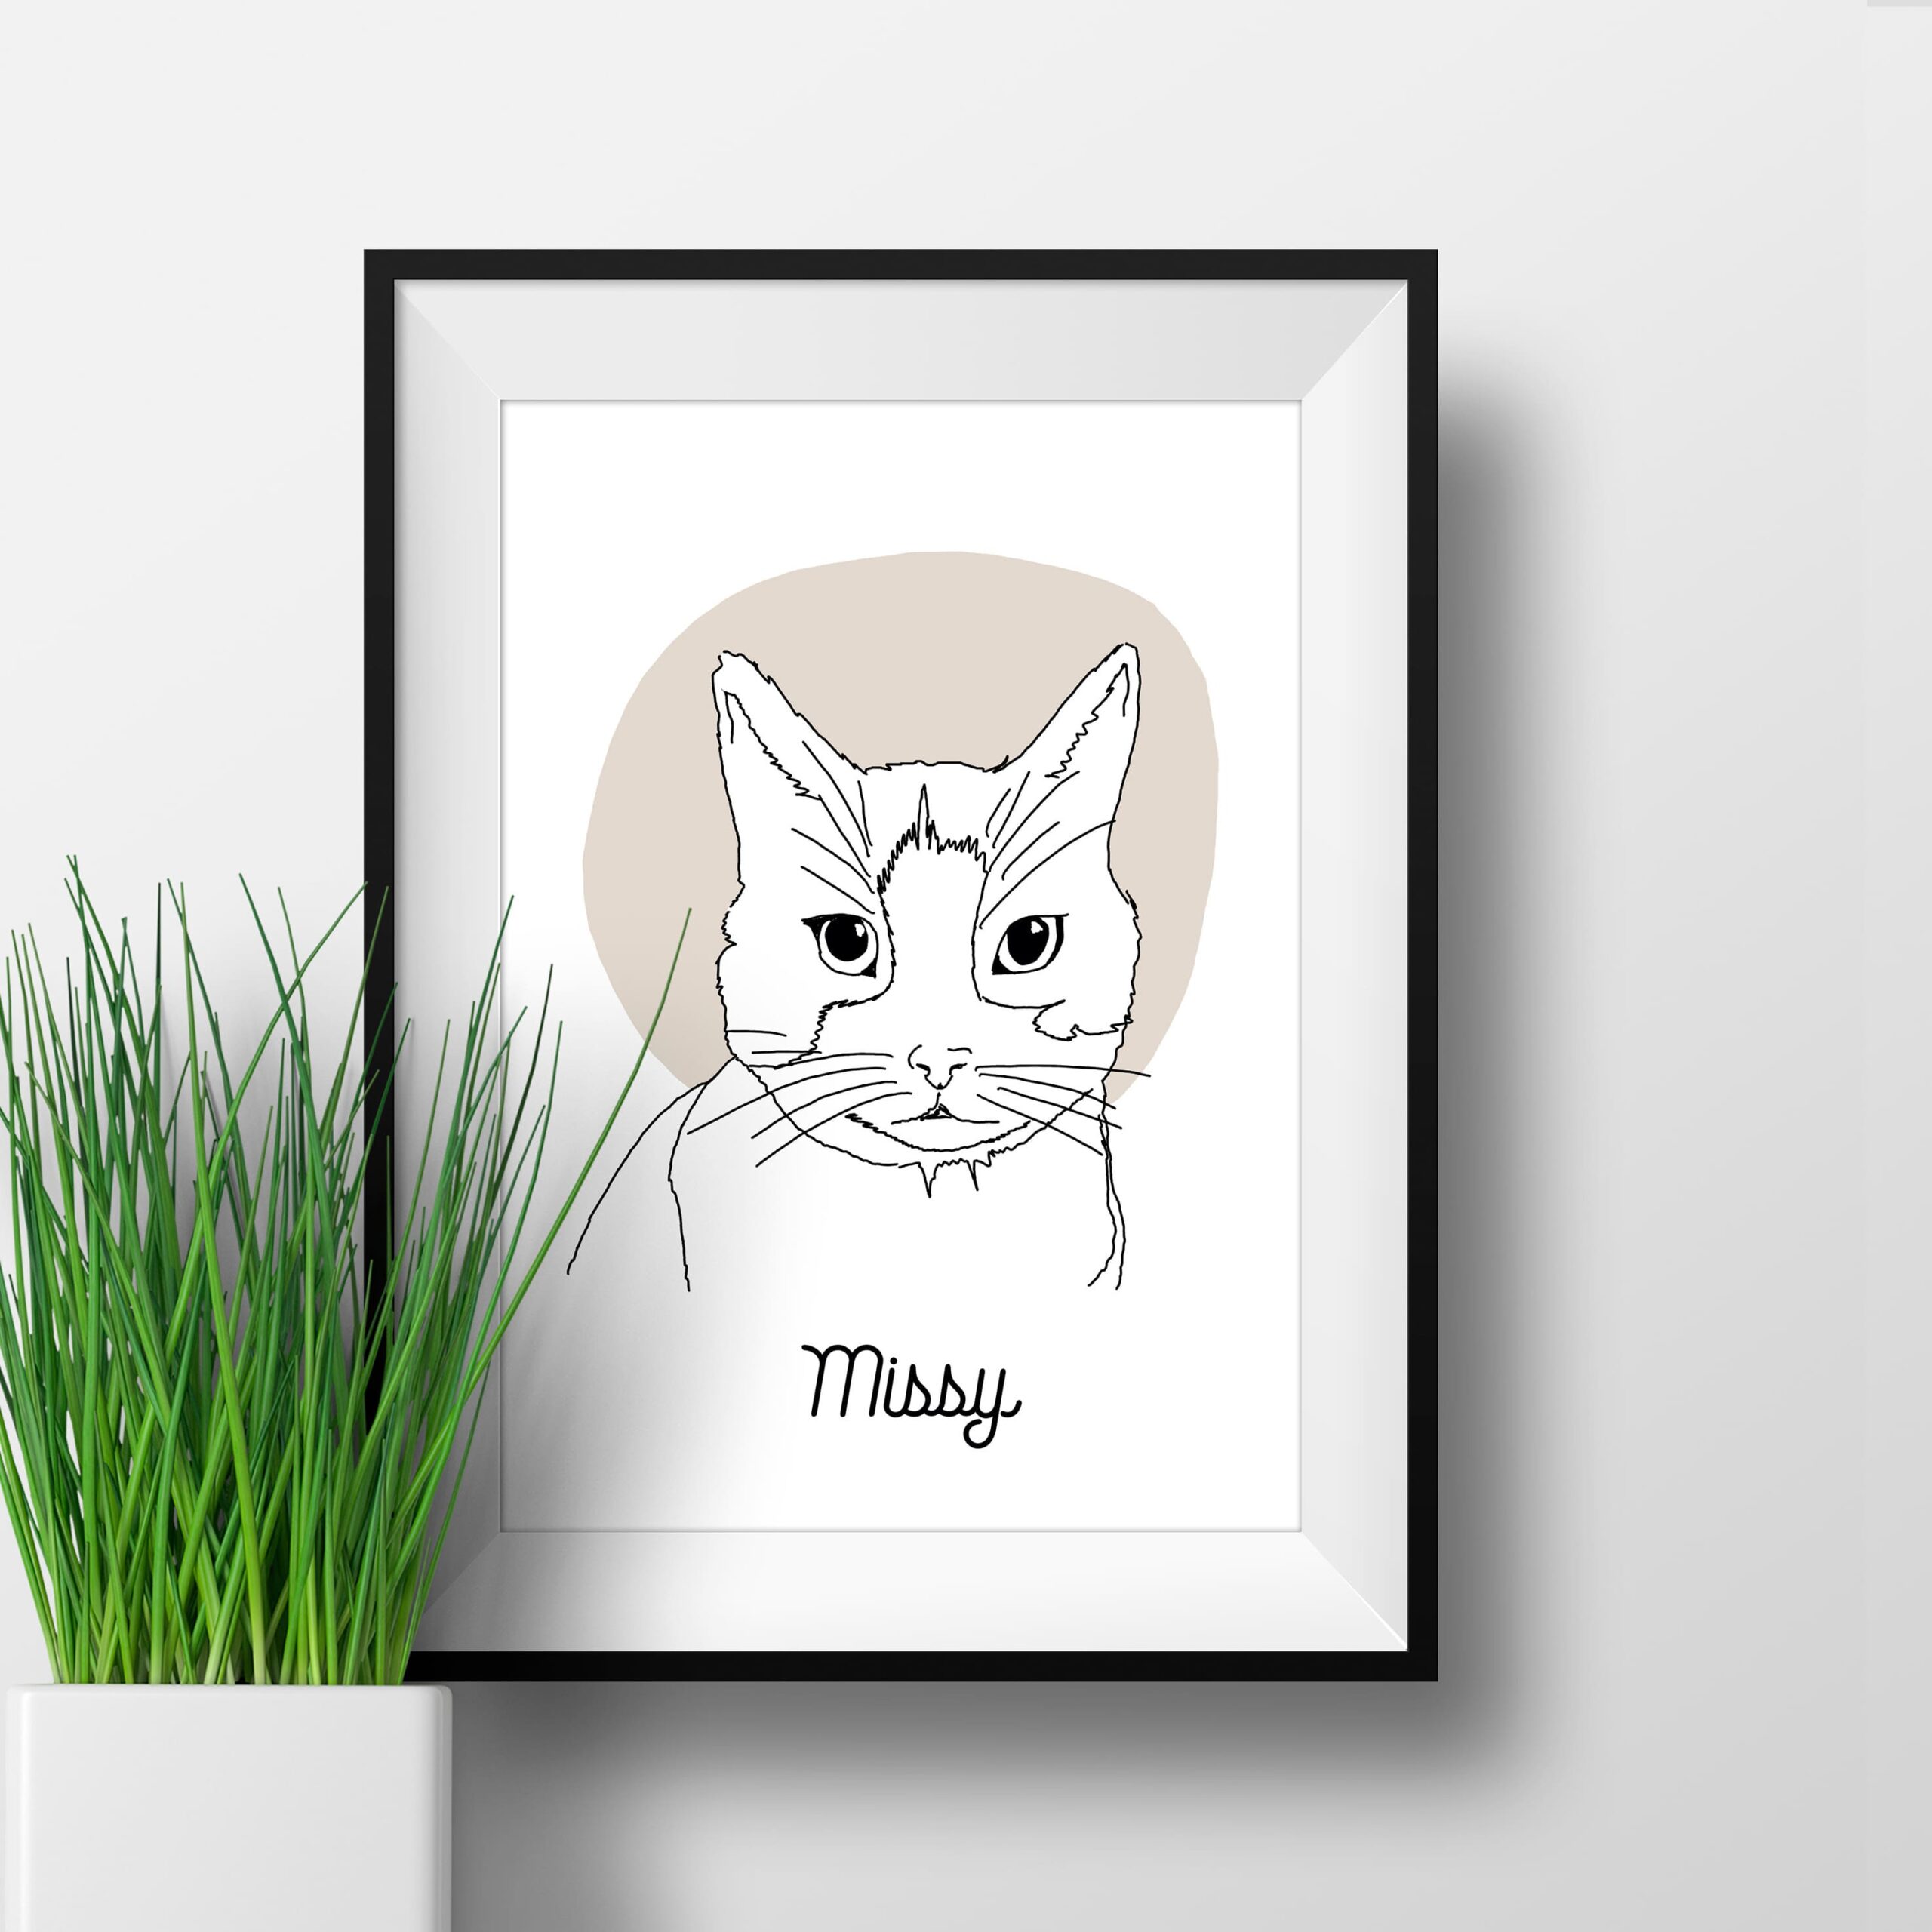 Minimalist custom cat portrait in line art style with name